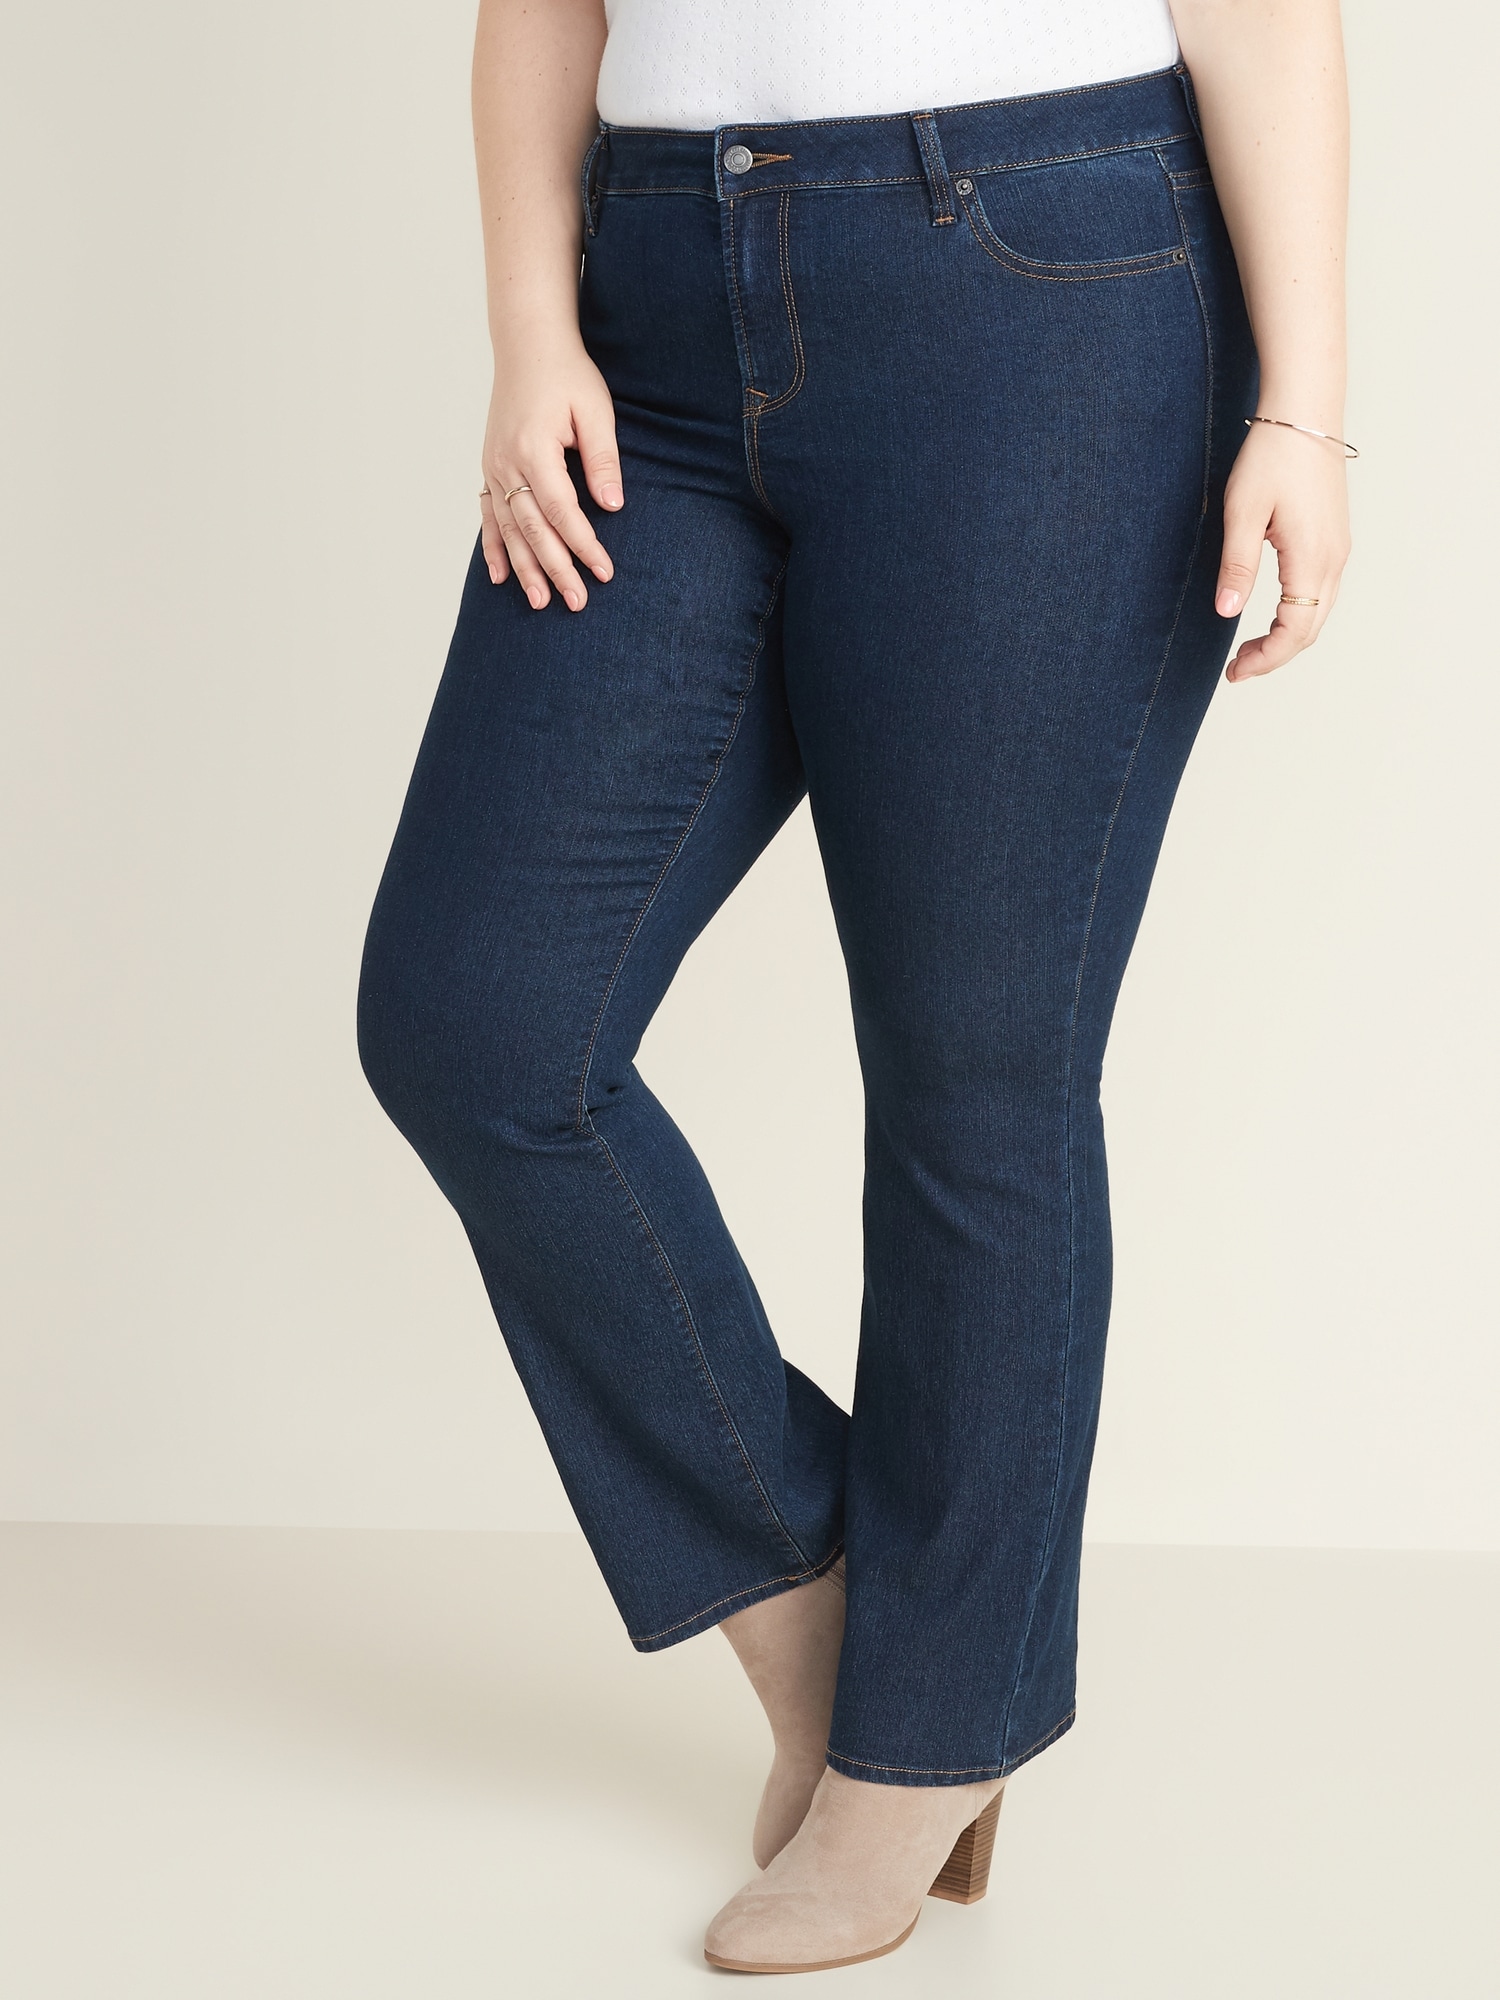 Women's Plus Size Bootcut Jeans